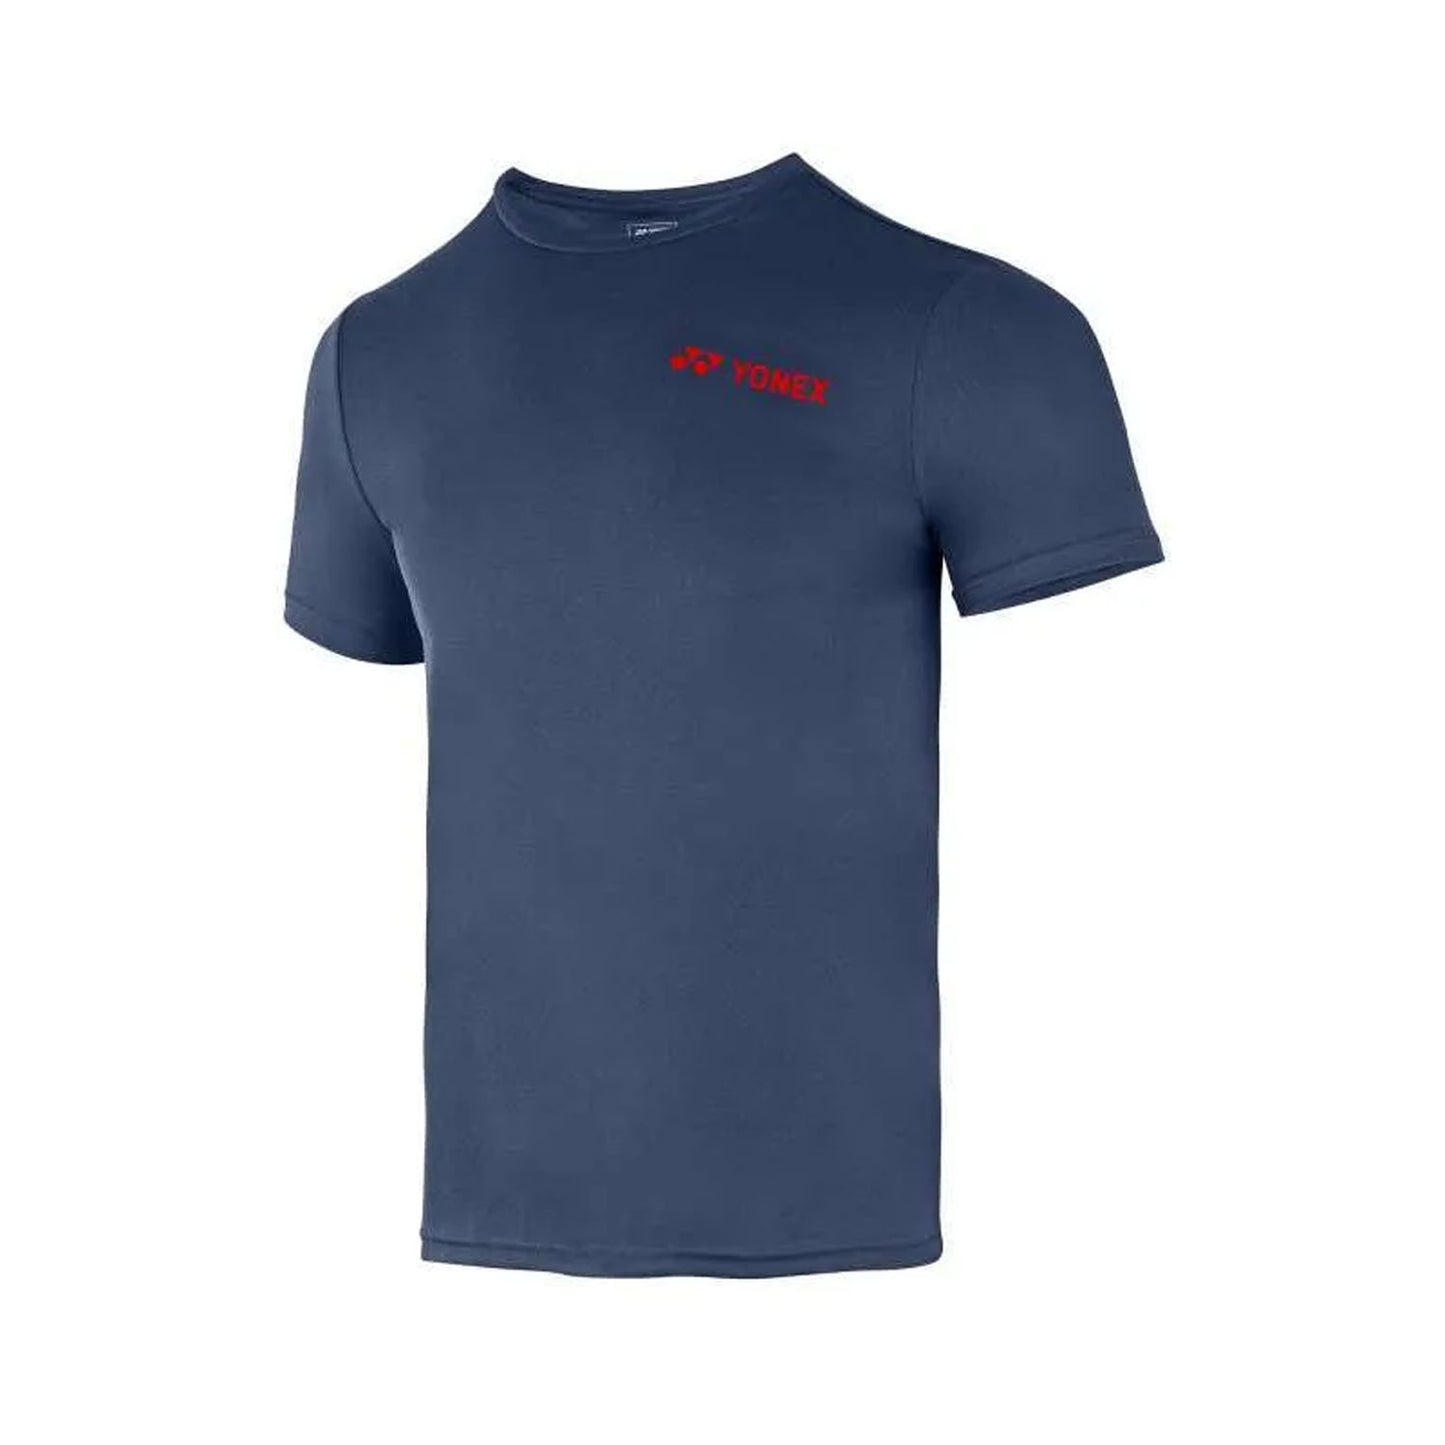 Yonex 2528 Easy23 Men's Round Neck T-Shirt - Best Price online Prokicksports.com